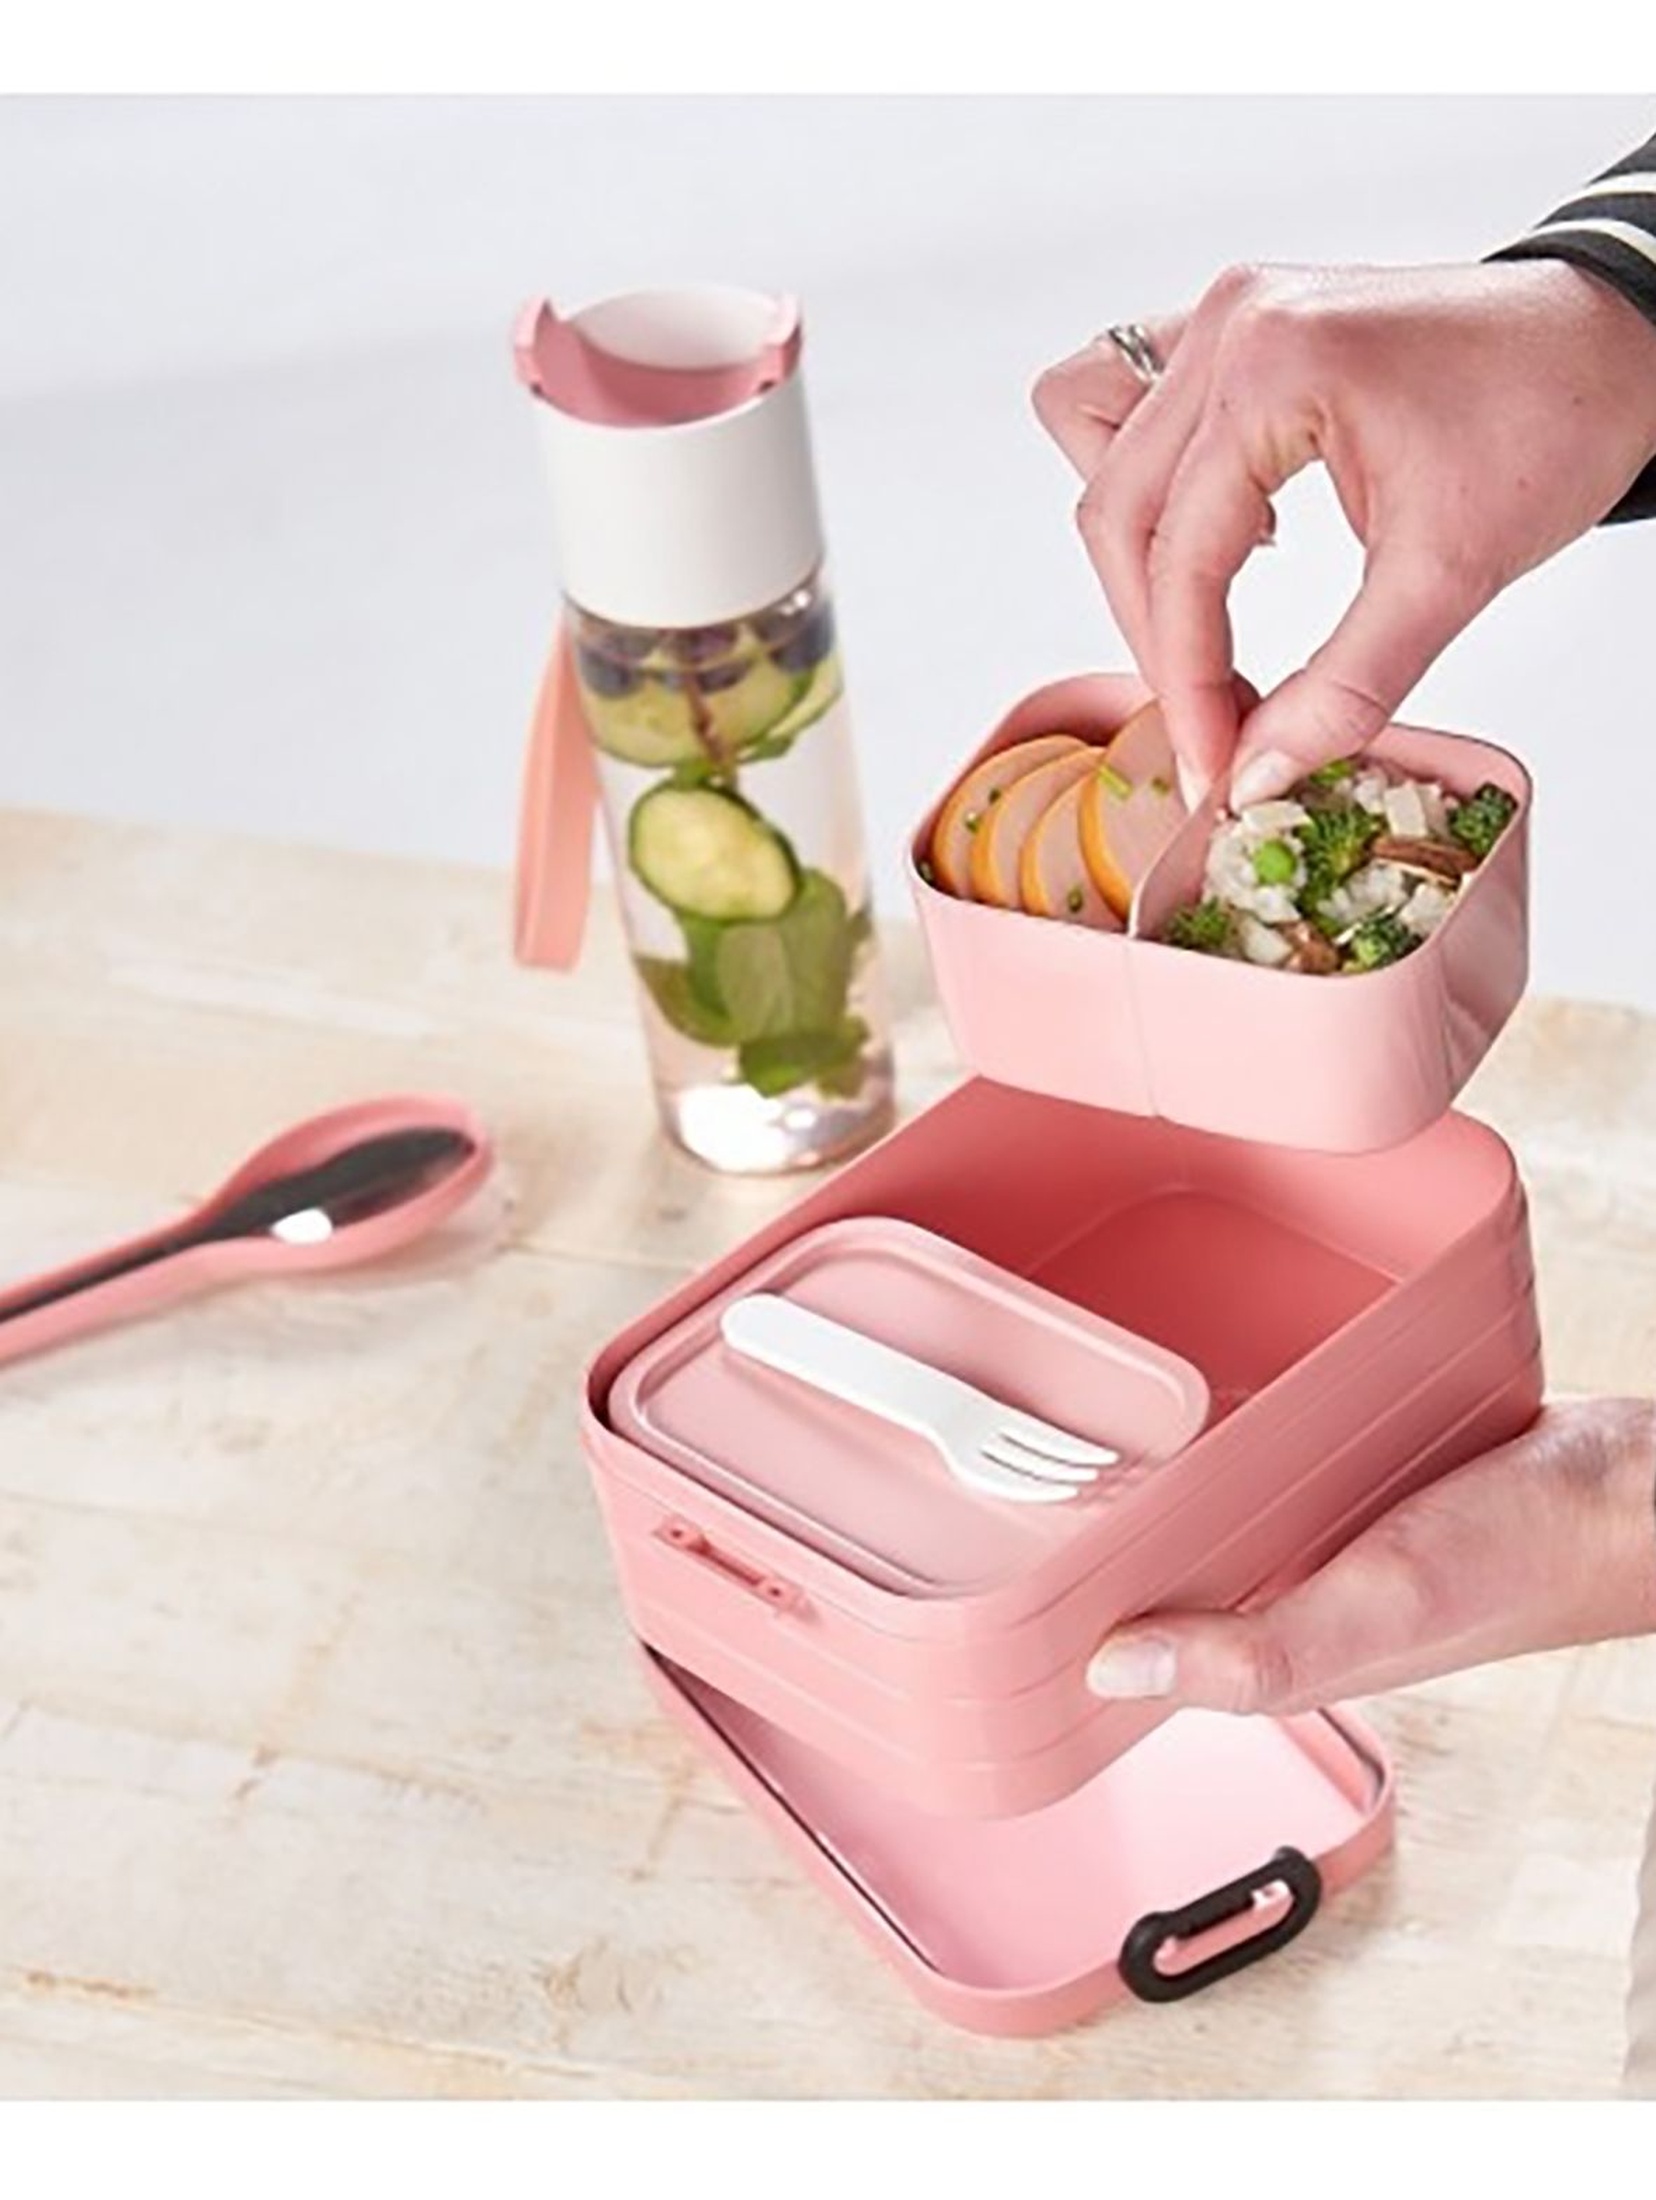 Lunchbox TAKE A BREAK BENTO midi- nordic green